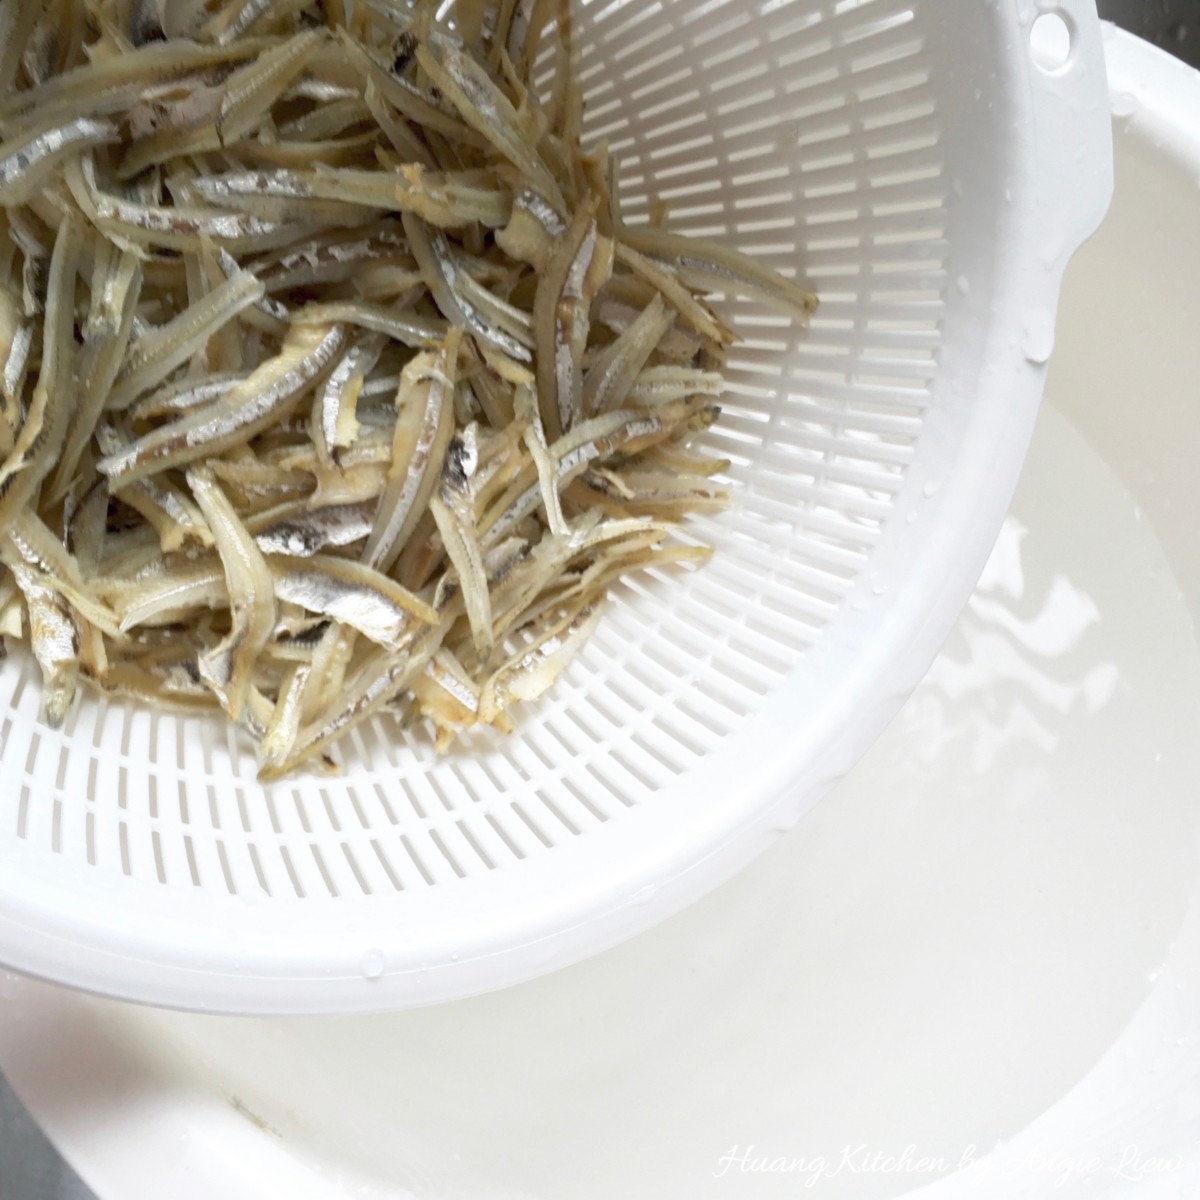 Nasi Lemak Recipe (Coconut Milk Steamed Rice) - rinse anchovies